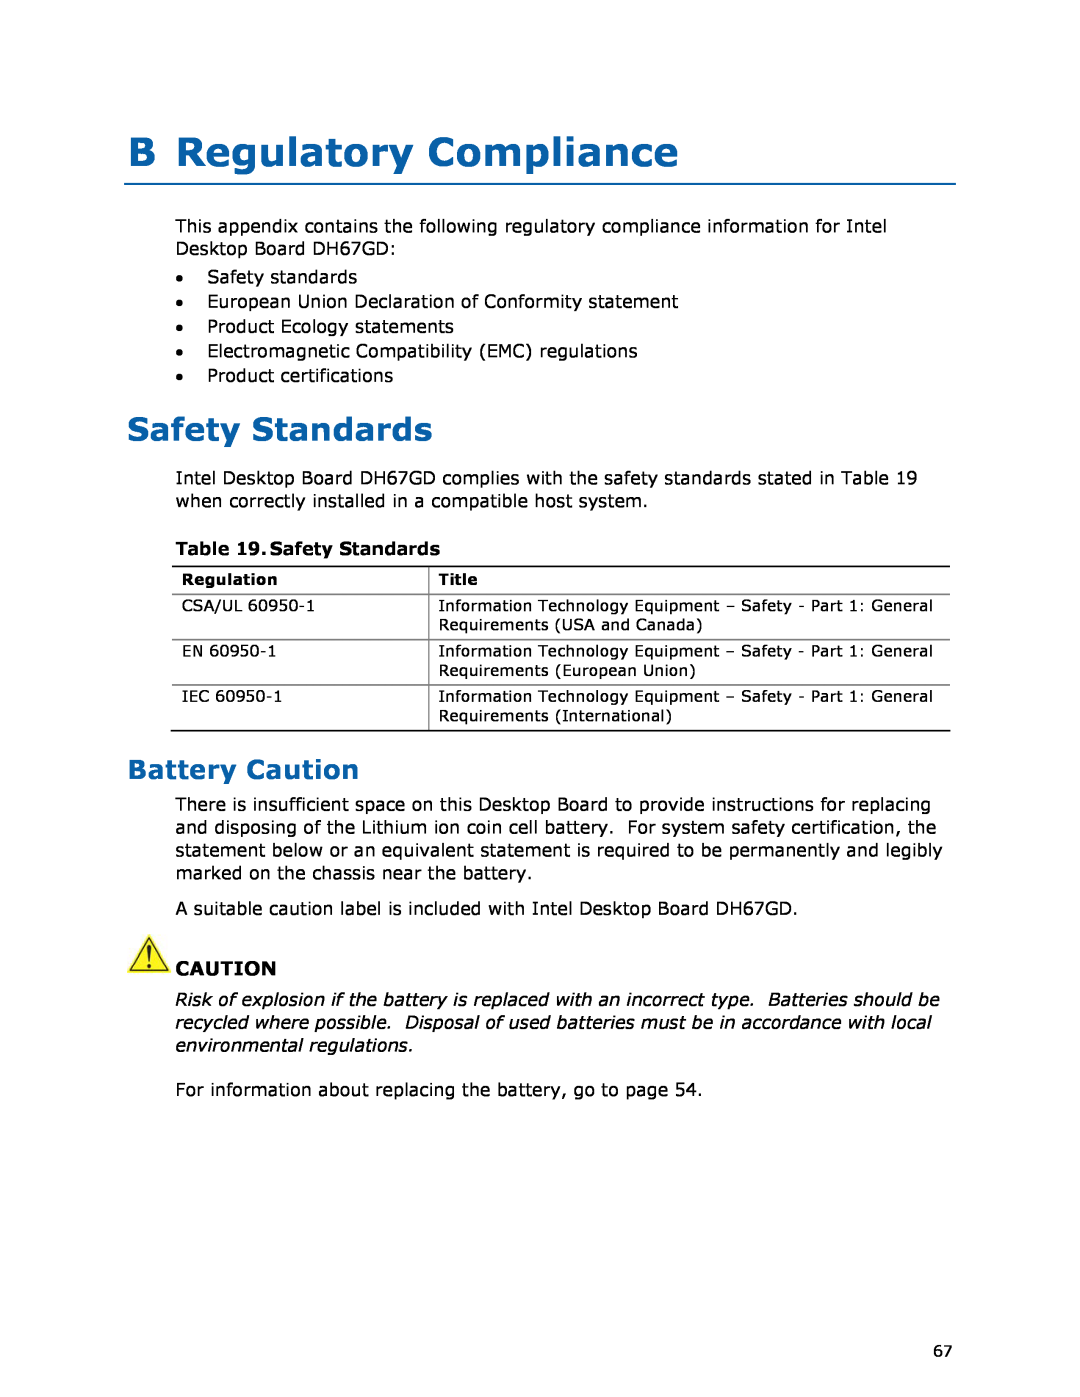 Intel BLKDH67GDB3, G13841-001 manual B Regulatory Compliance, Safety Standards, Battery Caution 